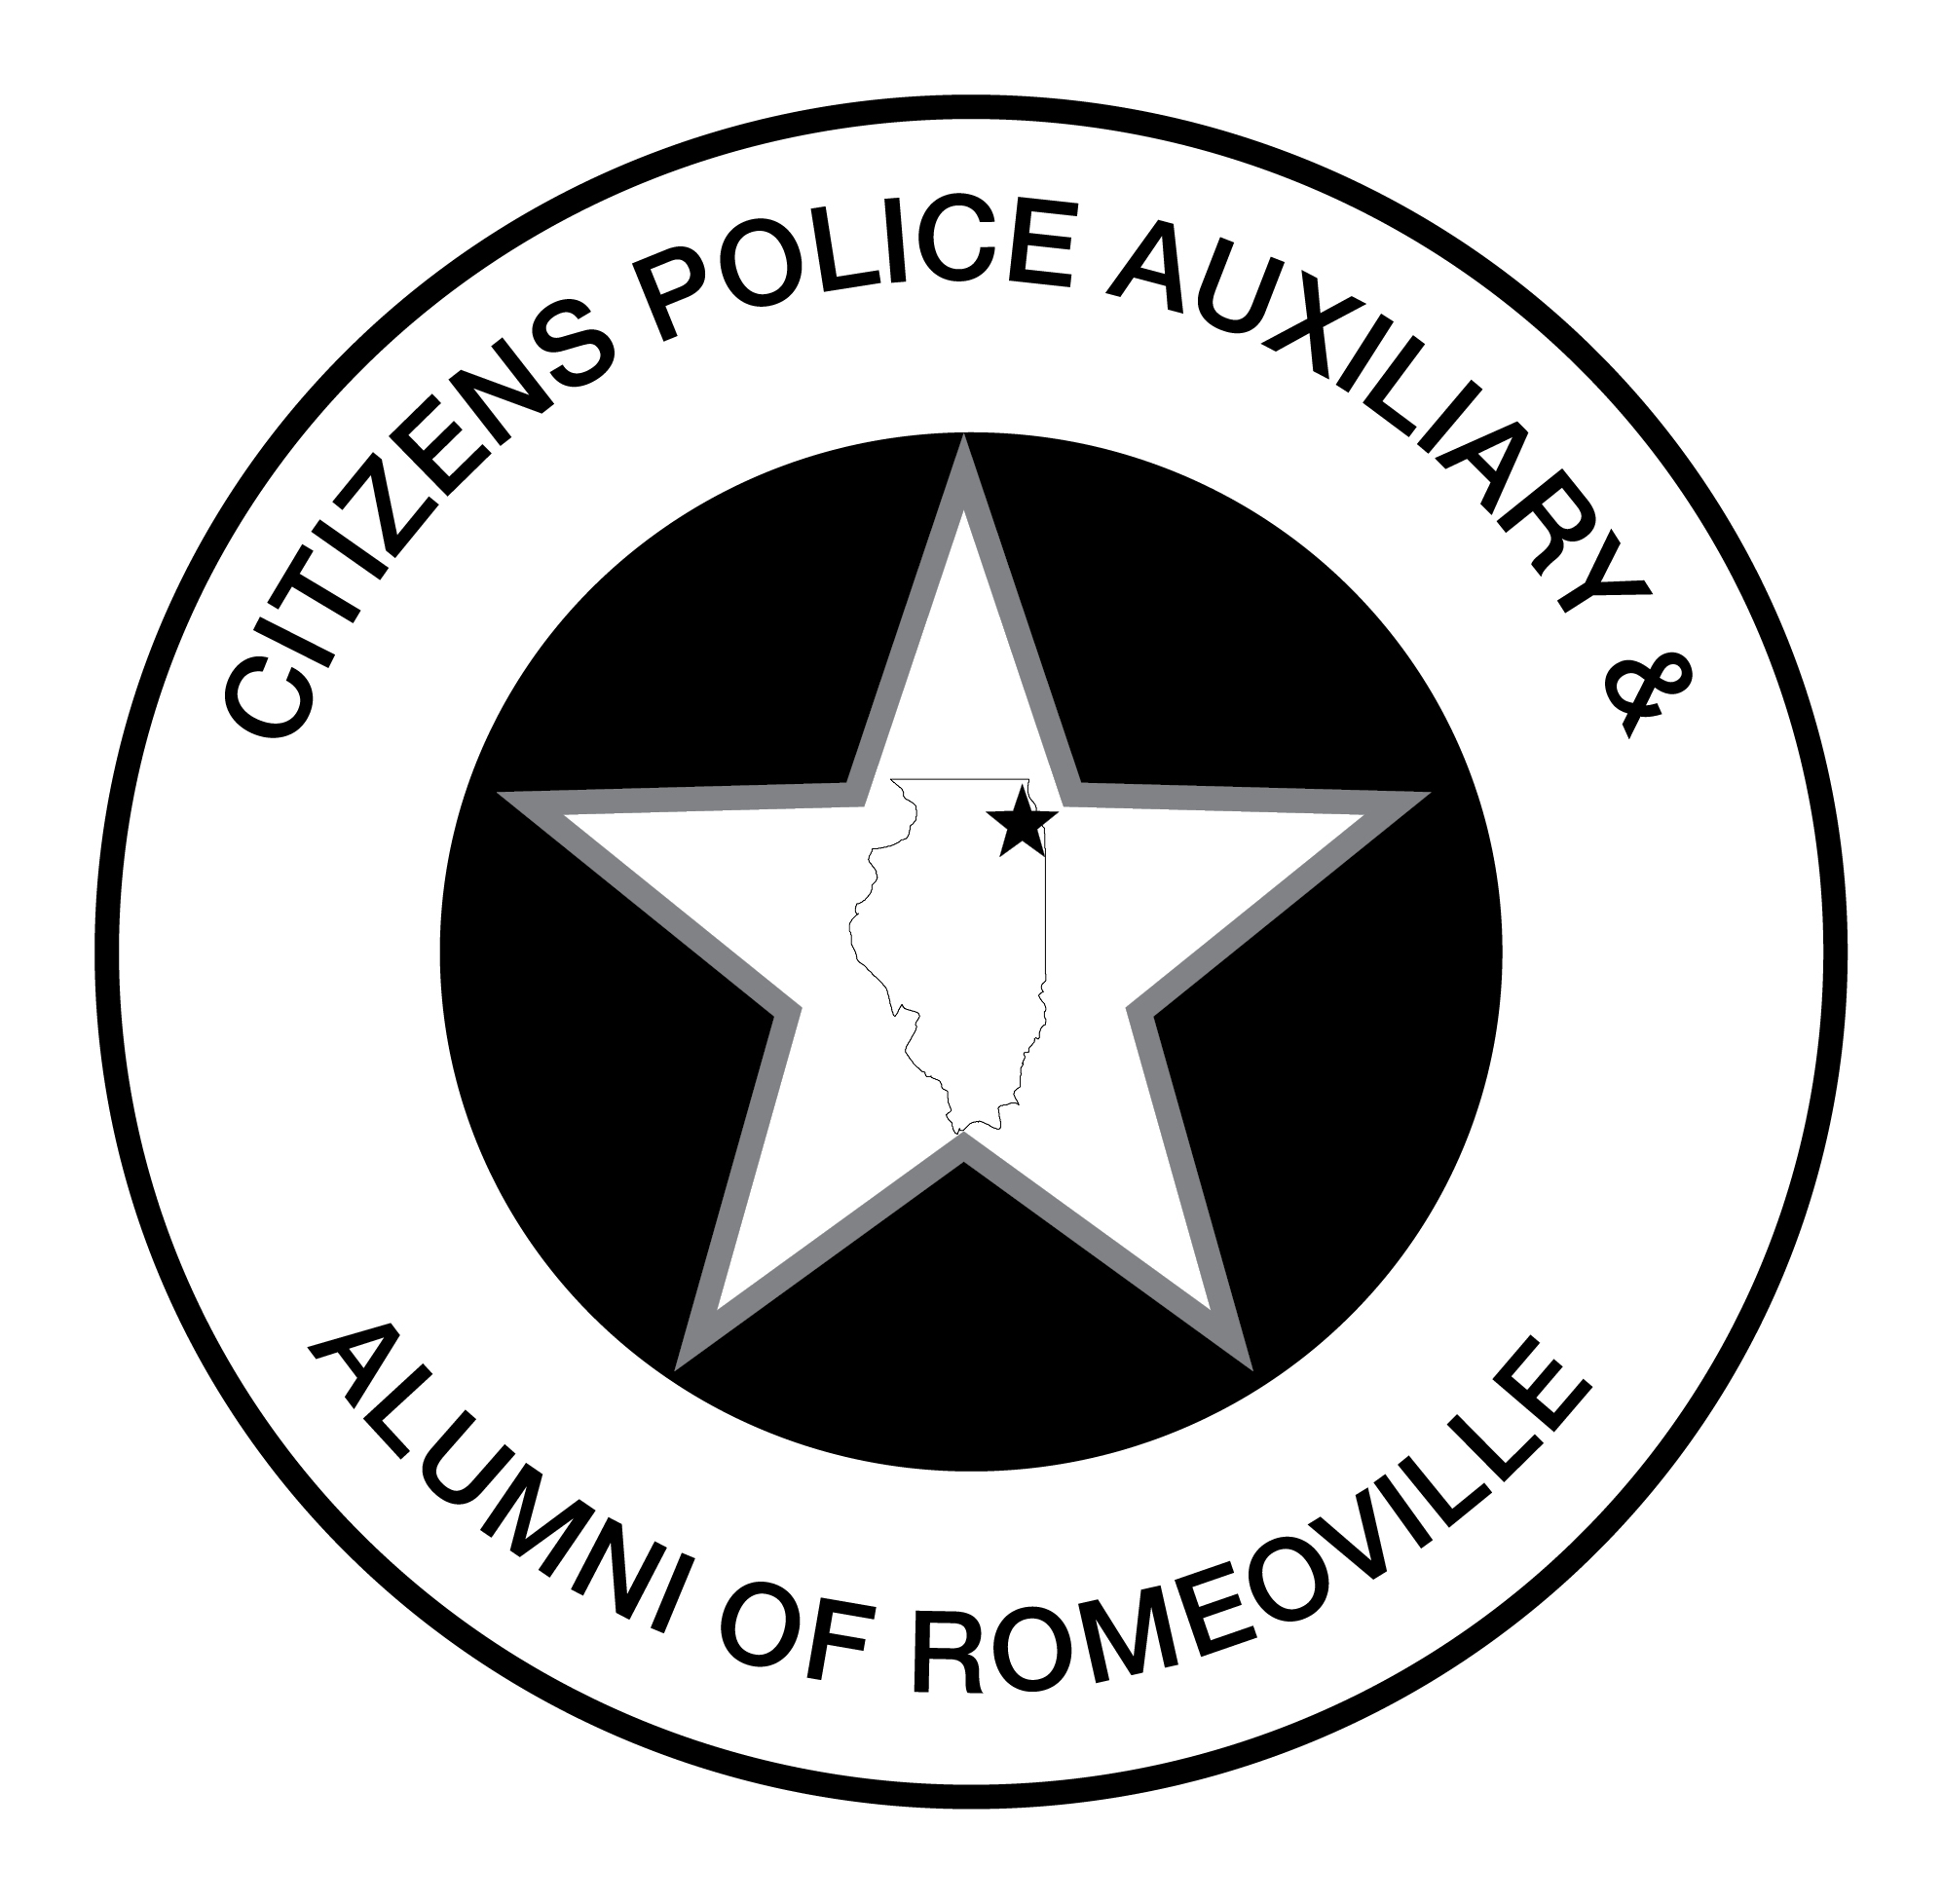 Citizens Police Auxiliary & Alumni of Romeoville